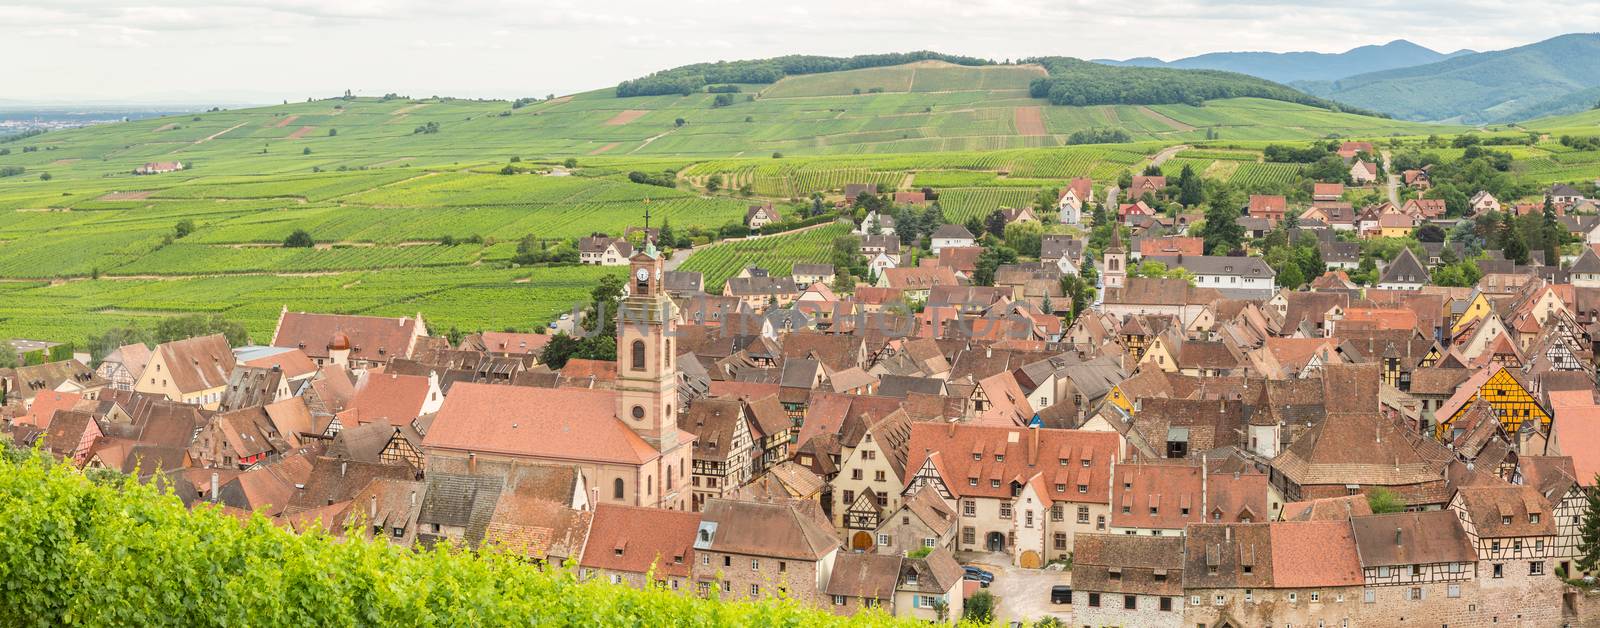 Riquewihr Alsace France by vichie81